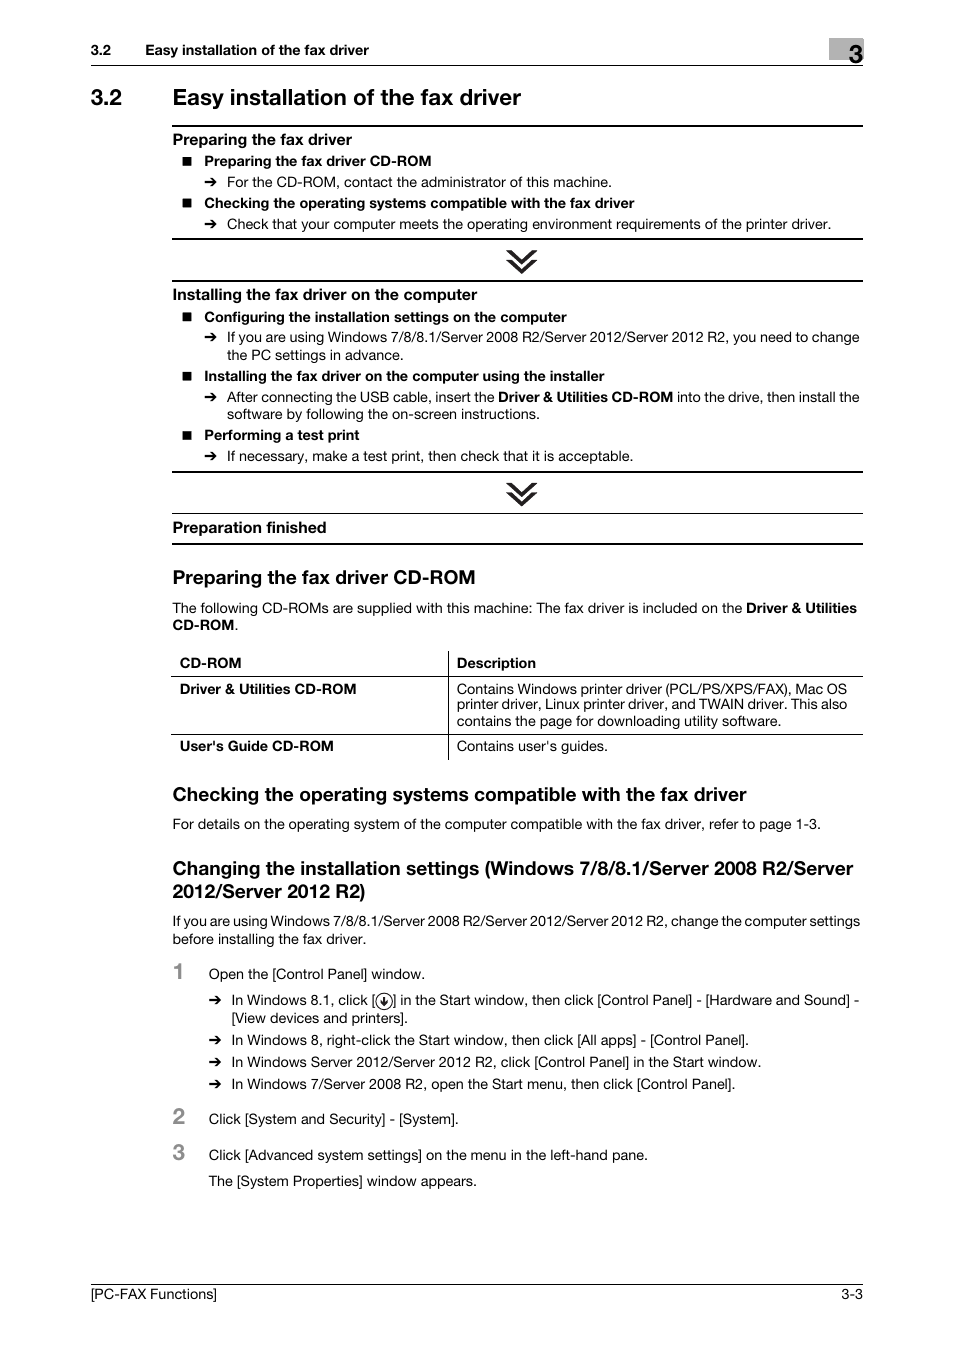 2 easy installation of the fax driver, Preparing the fax driver cd-rom | Konica Minolta bizhub 4050 User Manual | Page 17 / 61